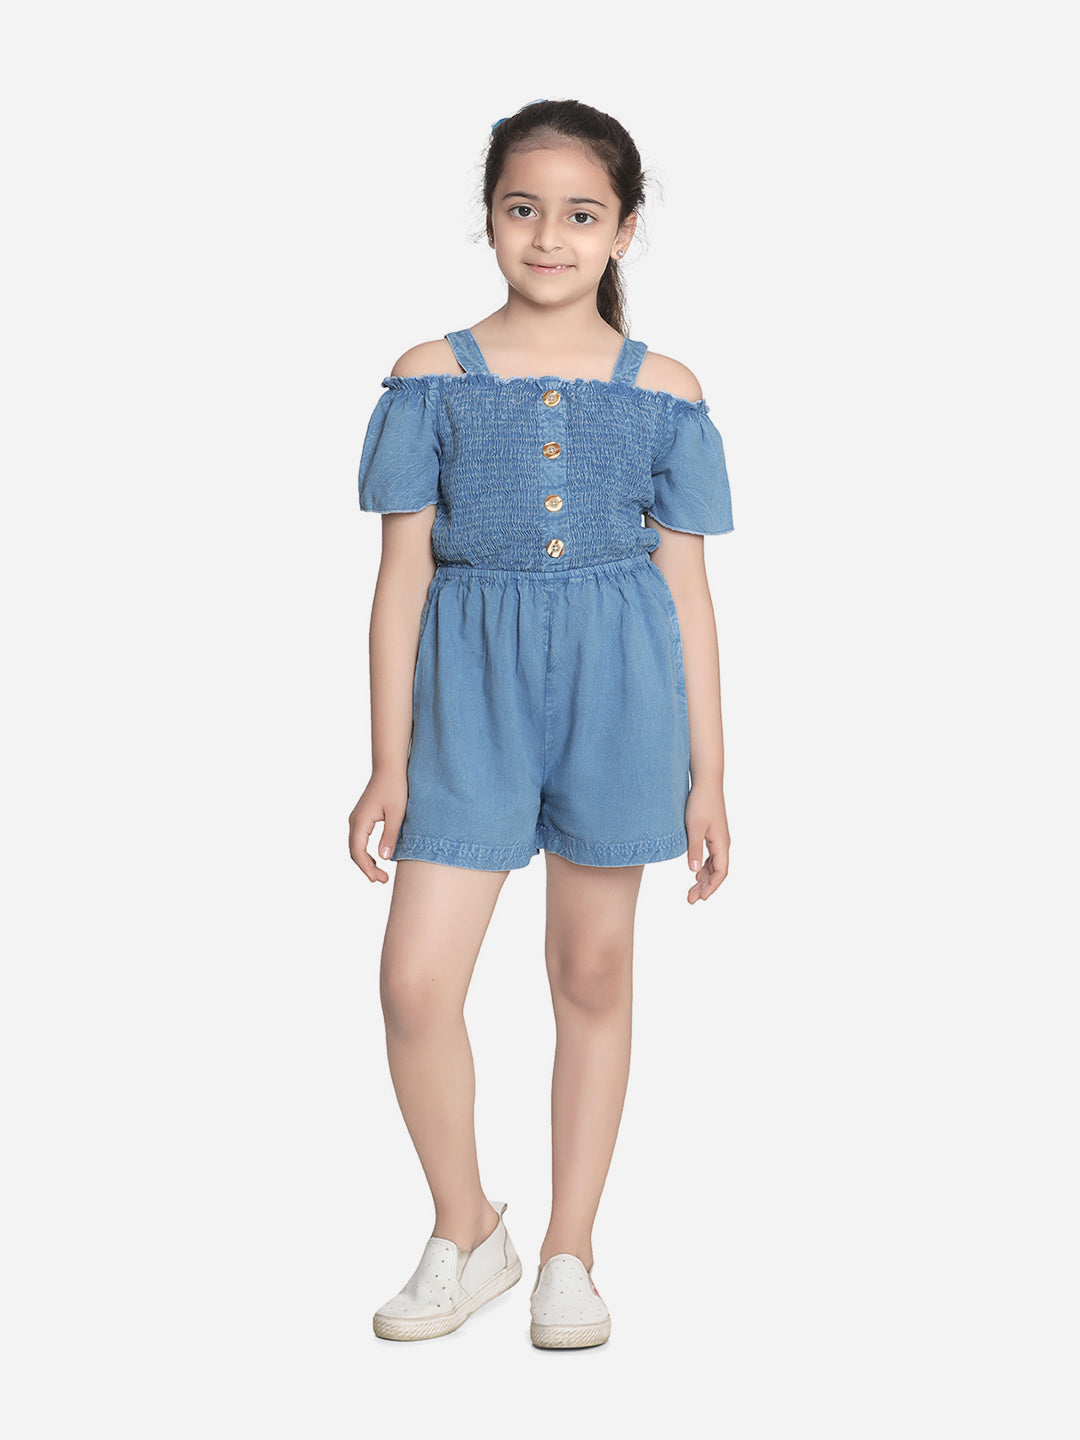 Girls Blue Rayon Shorts Style Playsuit